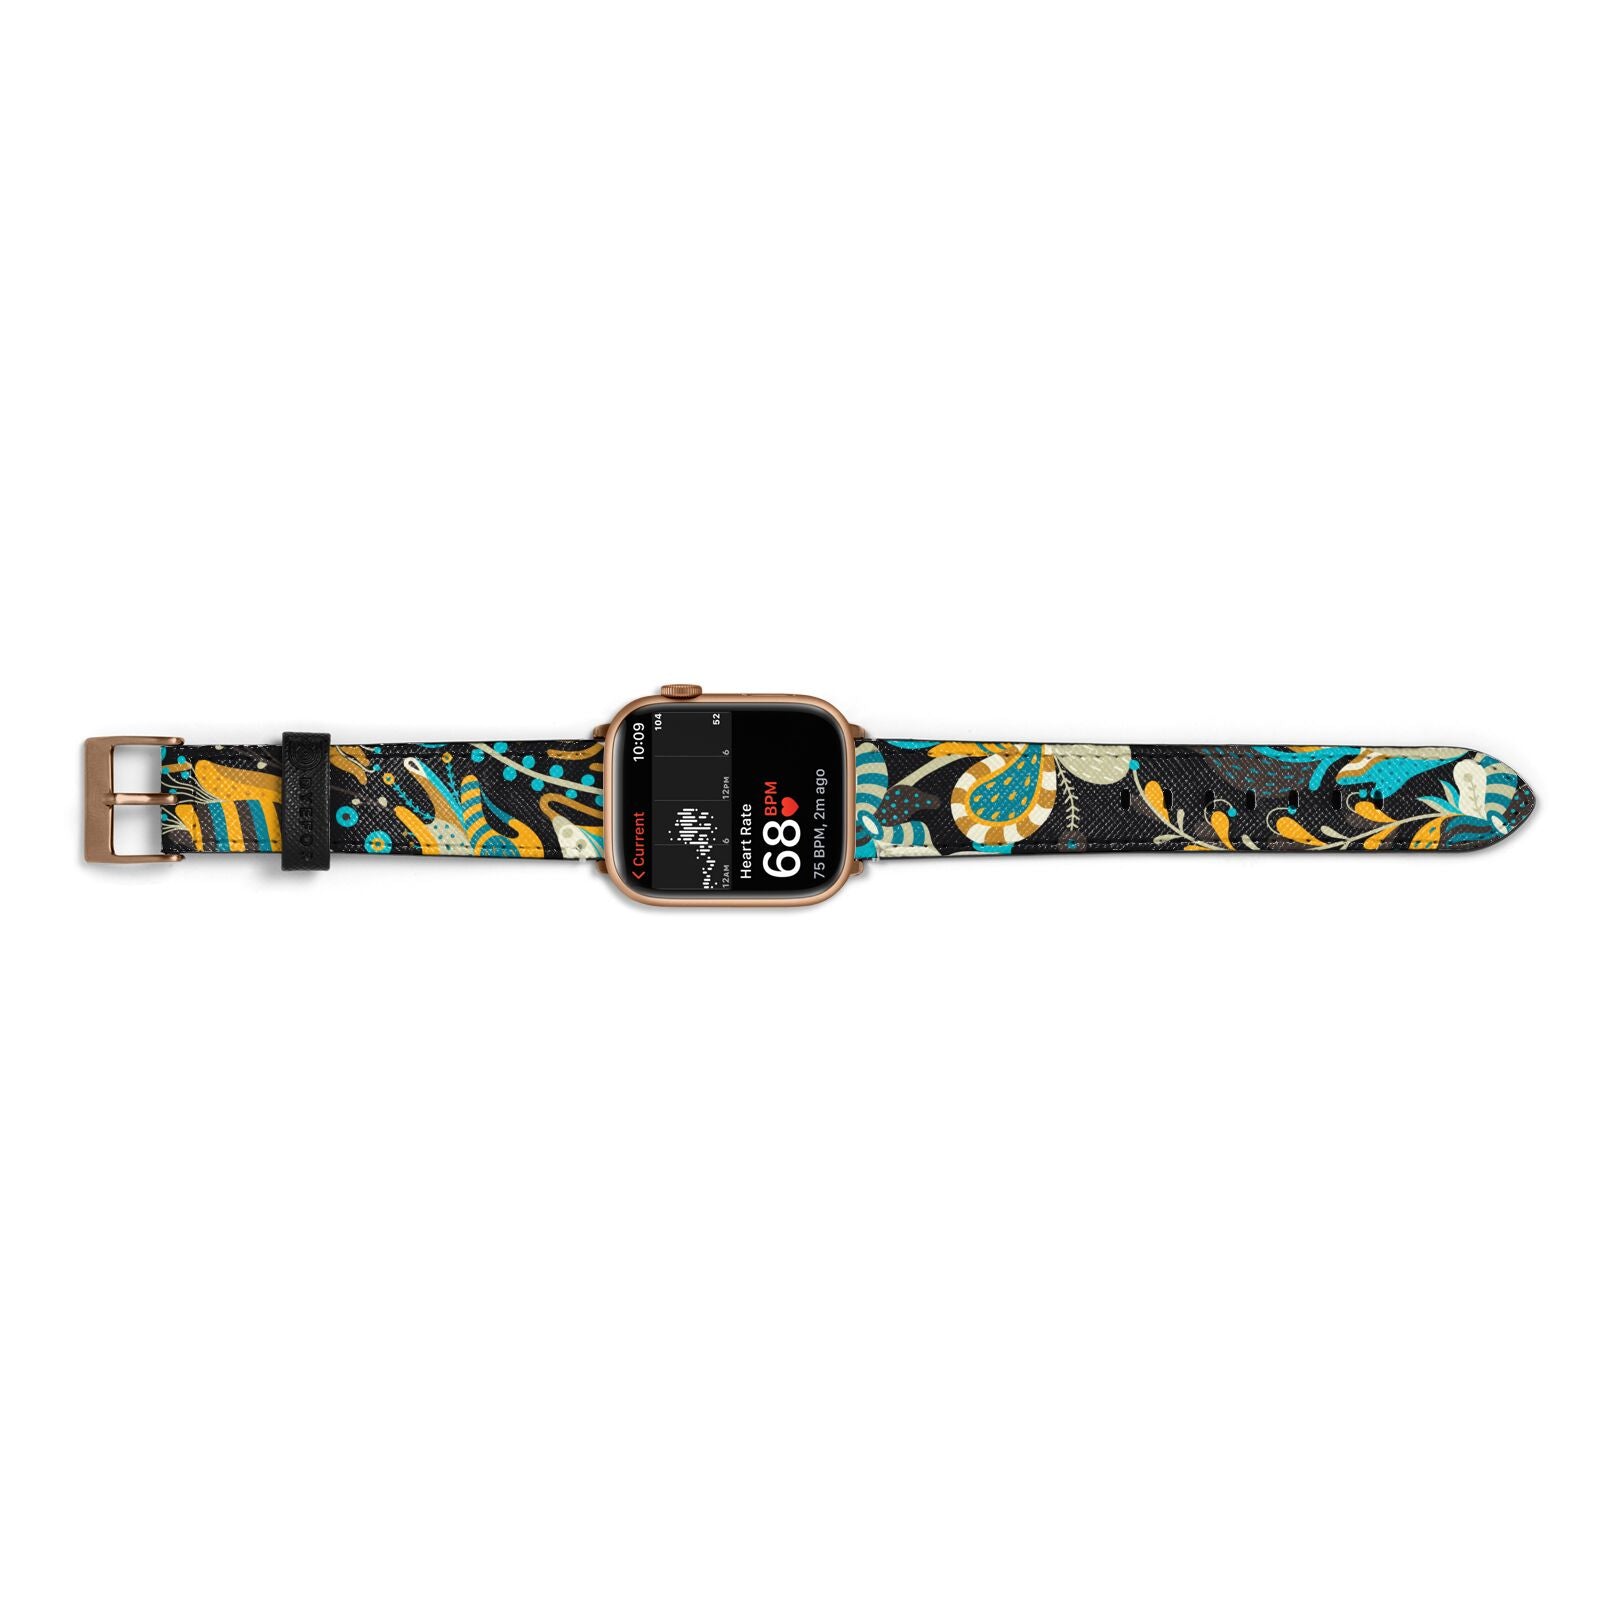 Colourful Floral Apple Watch Strap Size 38mm Landscape Image Gold Hardware